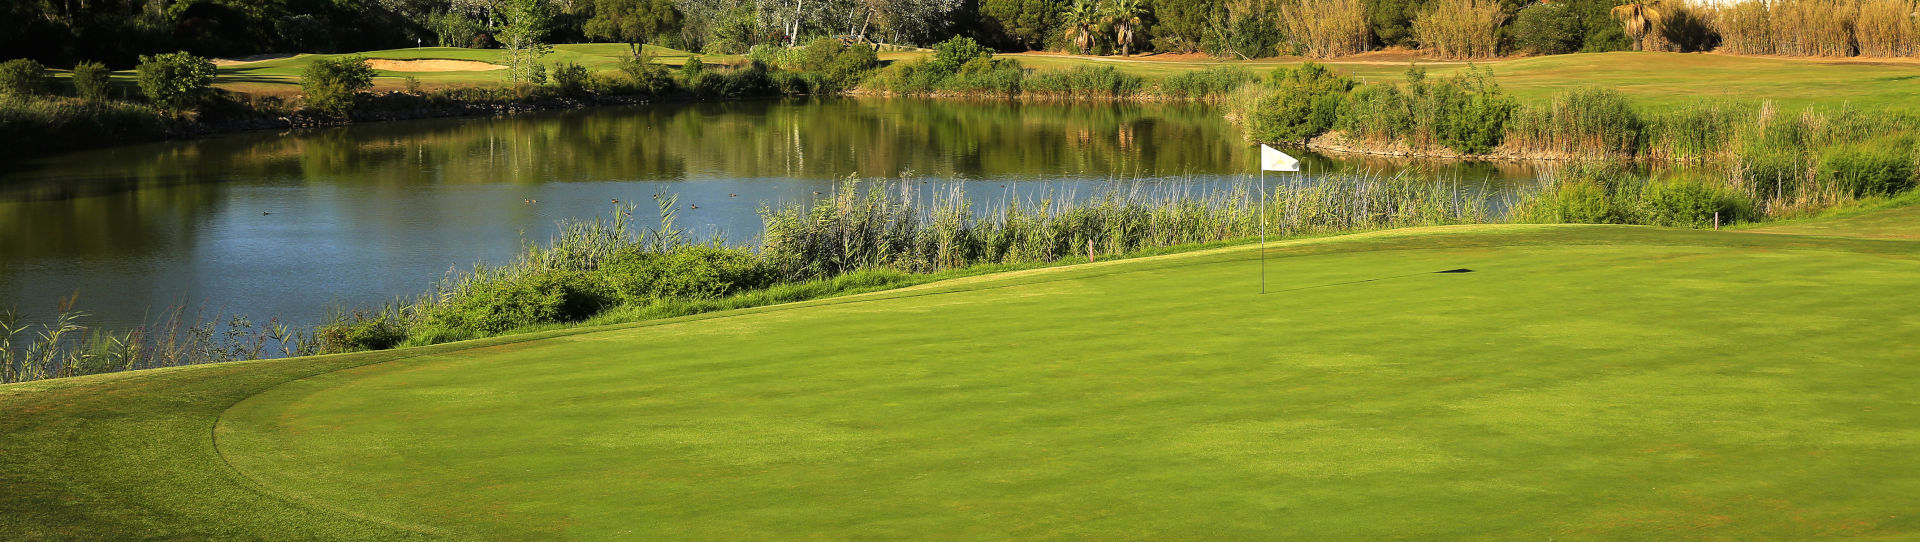 Portugal golf courses - Vilamoura Laguna golf course - Photo 1